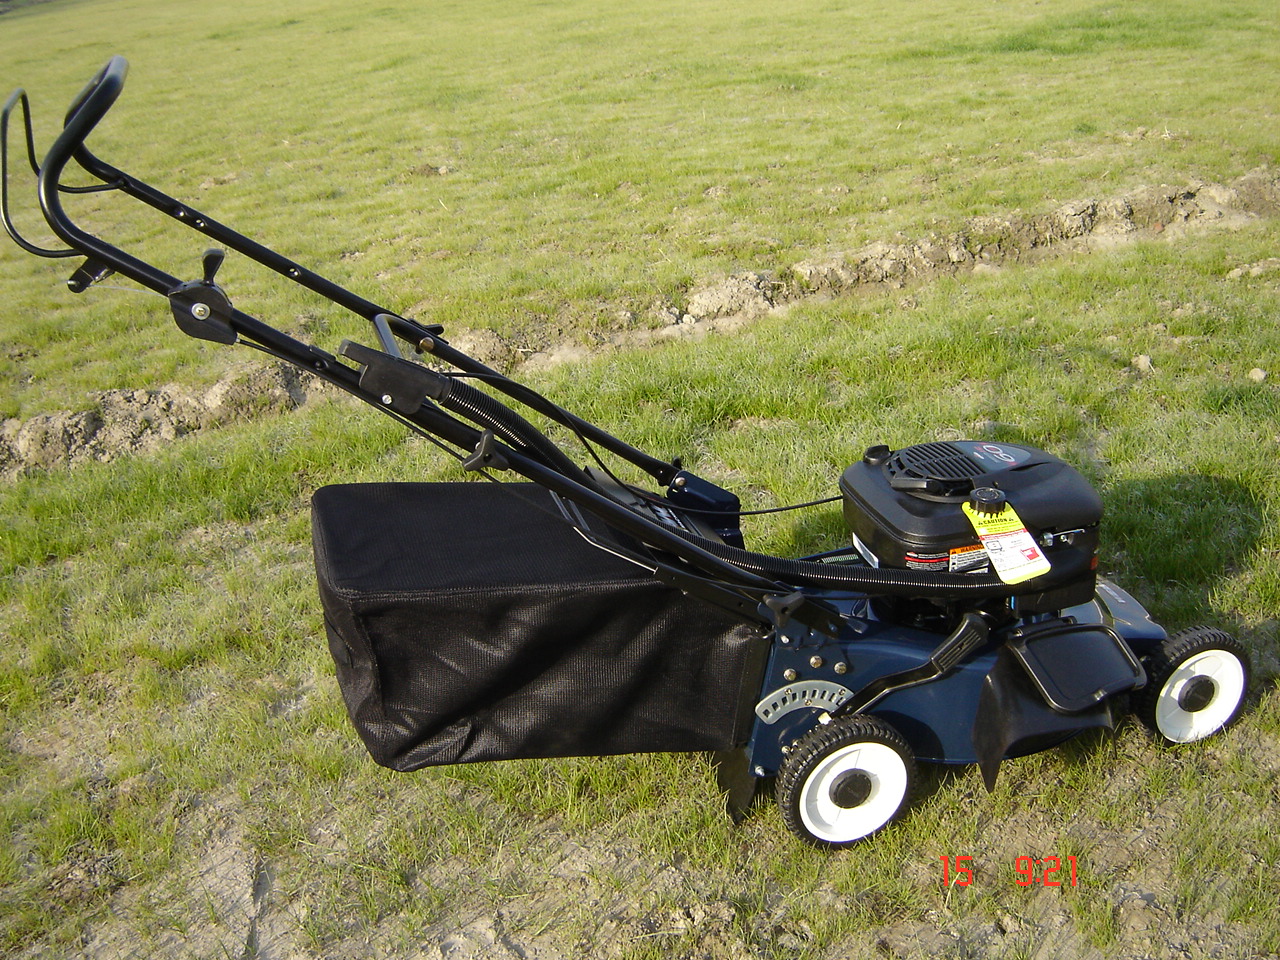 20" self propelled lawnmower(three functions in one)